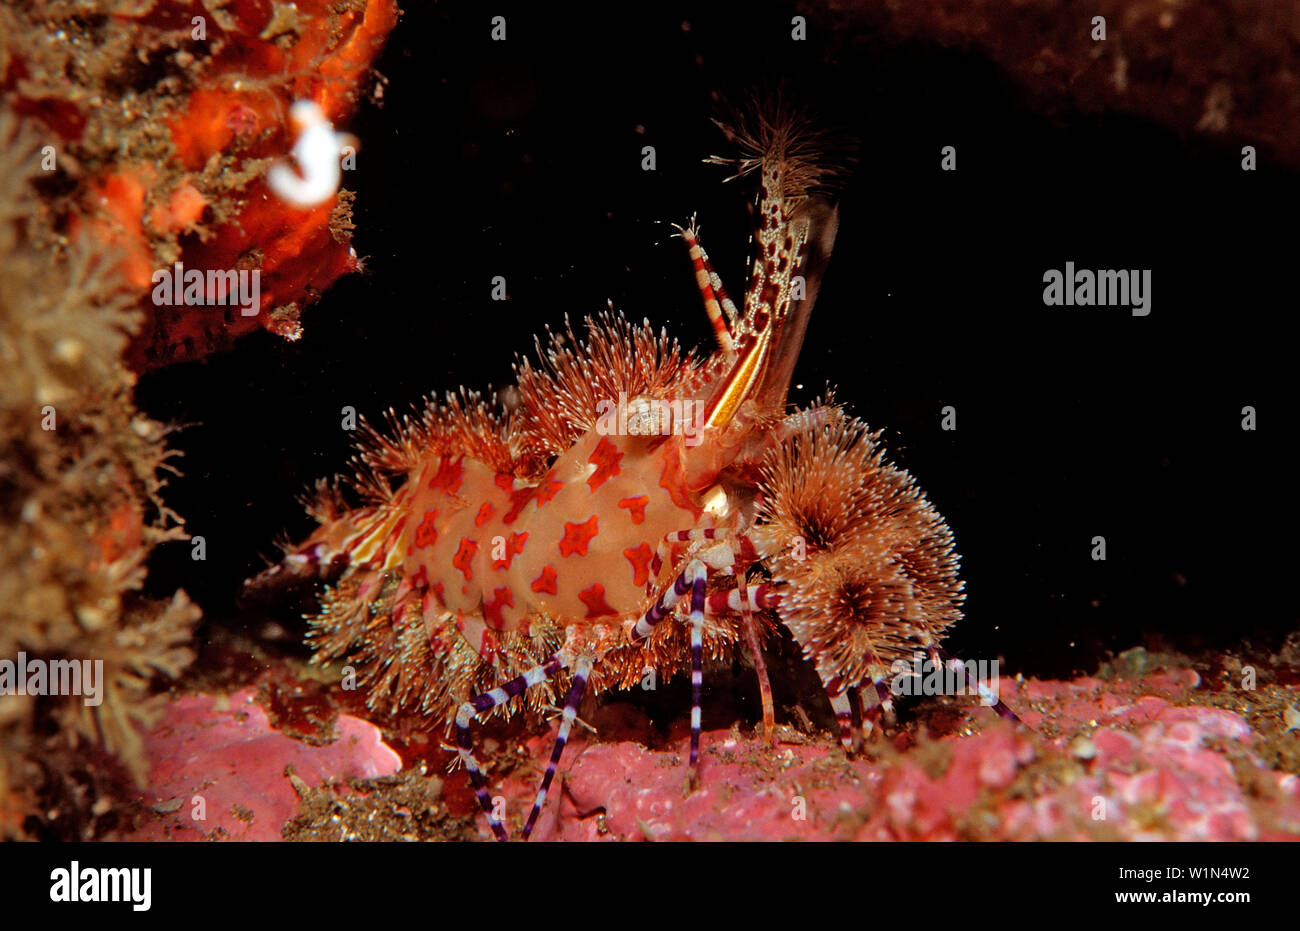 Marbled shrimp, Saron sp., Komodo National Park, Indian Ocean, Indonesia Stock Photo